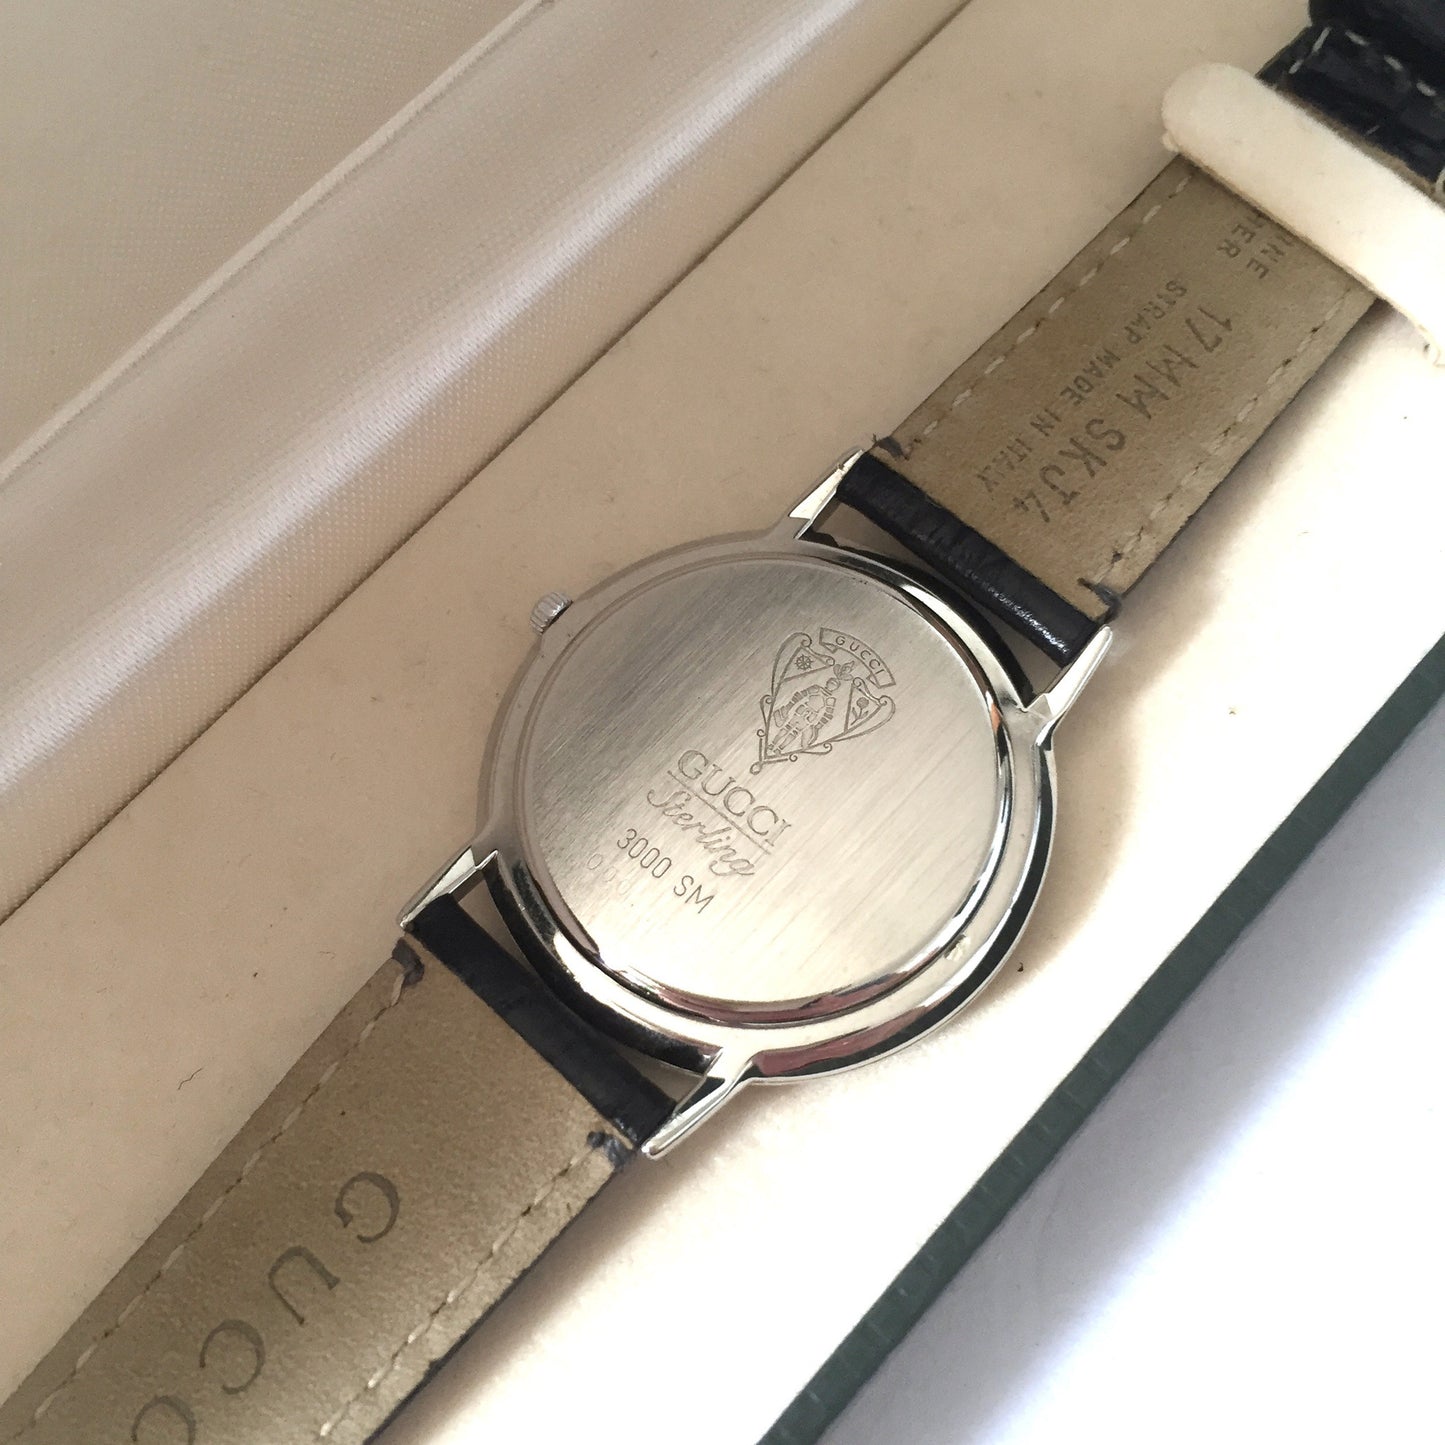 Gucci - Men's 3000SM Sterling Silver Watch